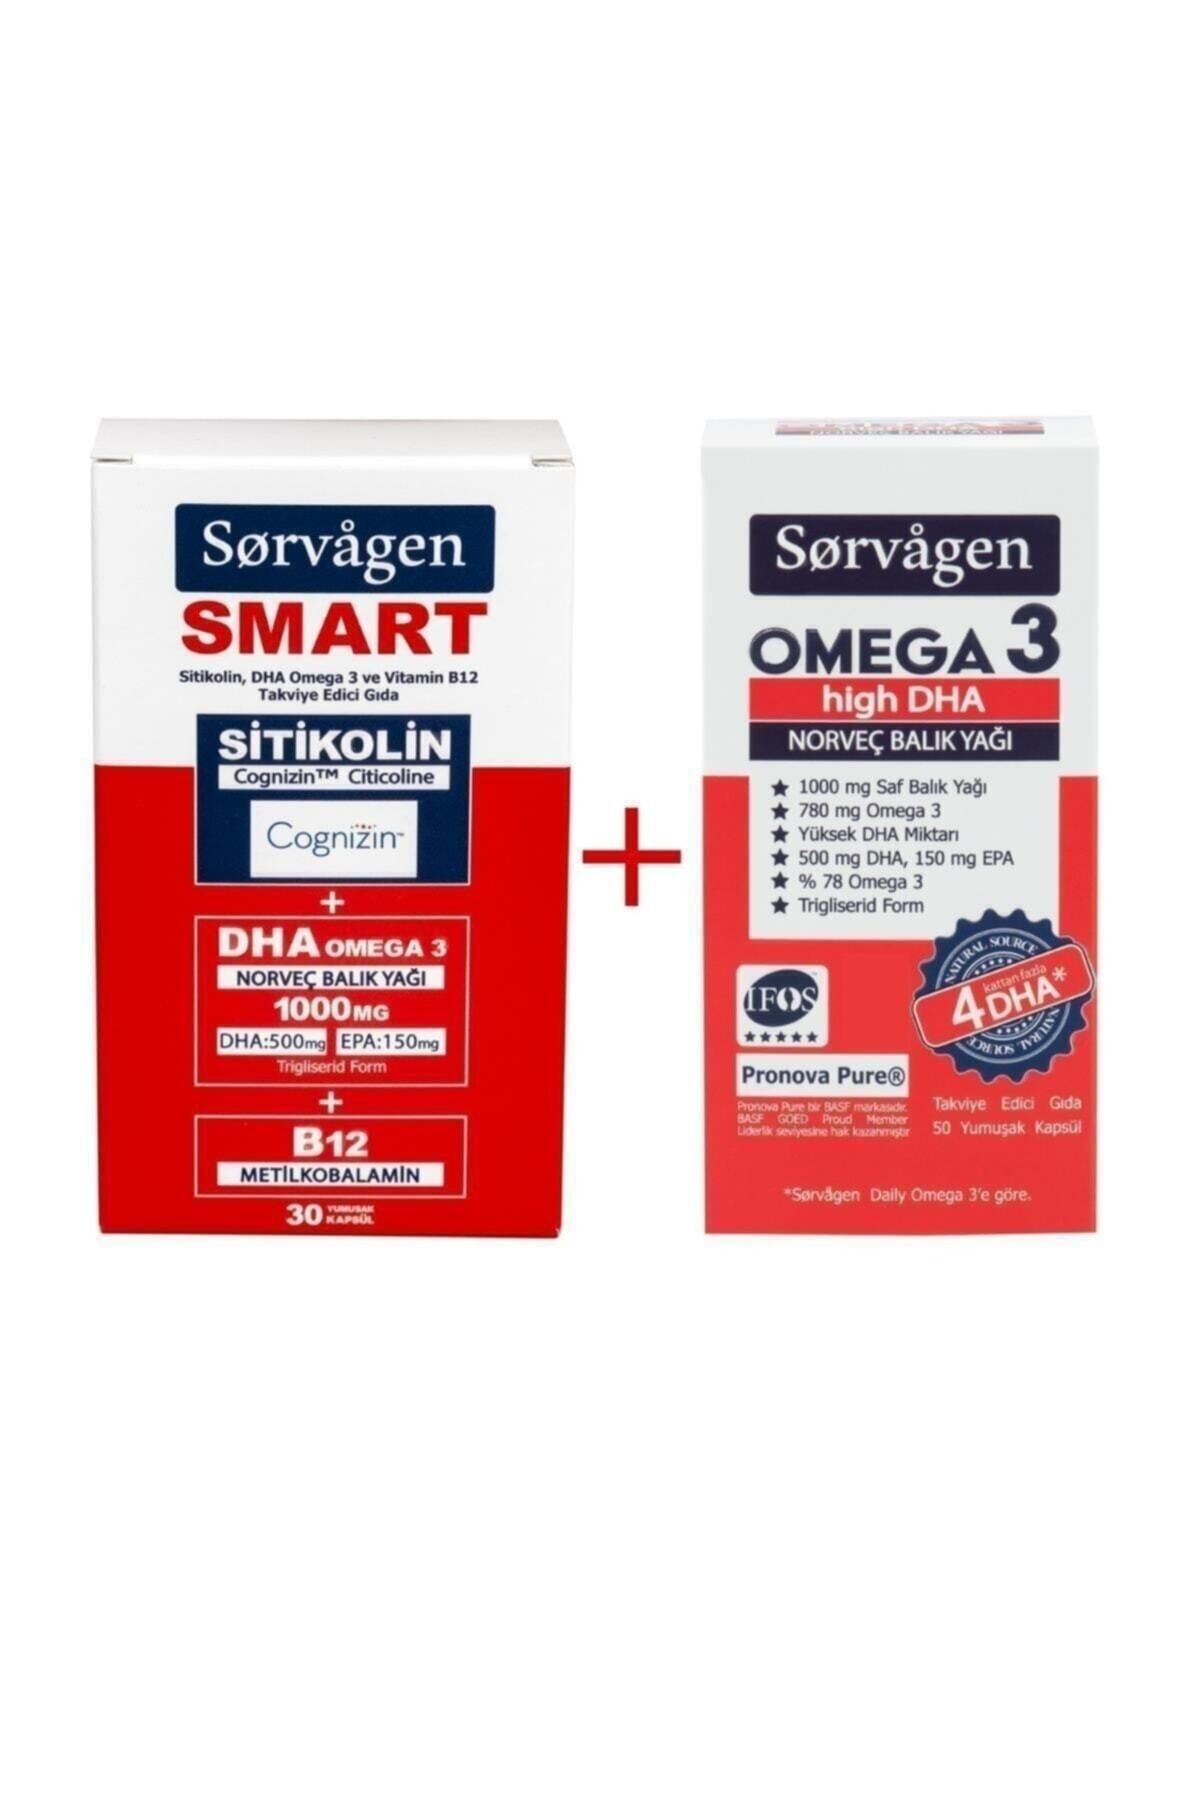 Sorvagen Smart Sitikolin, Dha Omega 3, B12 (30 Kapsül) + Omega 3 Hıgh Dha Norveç Balık Yağı